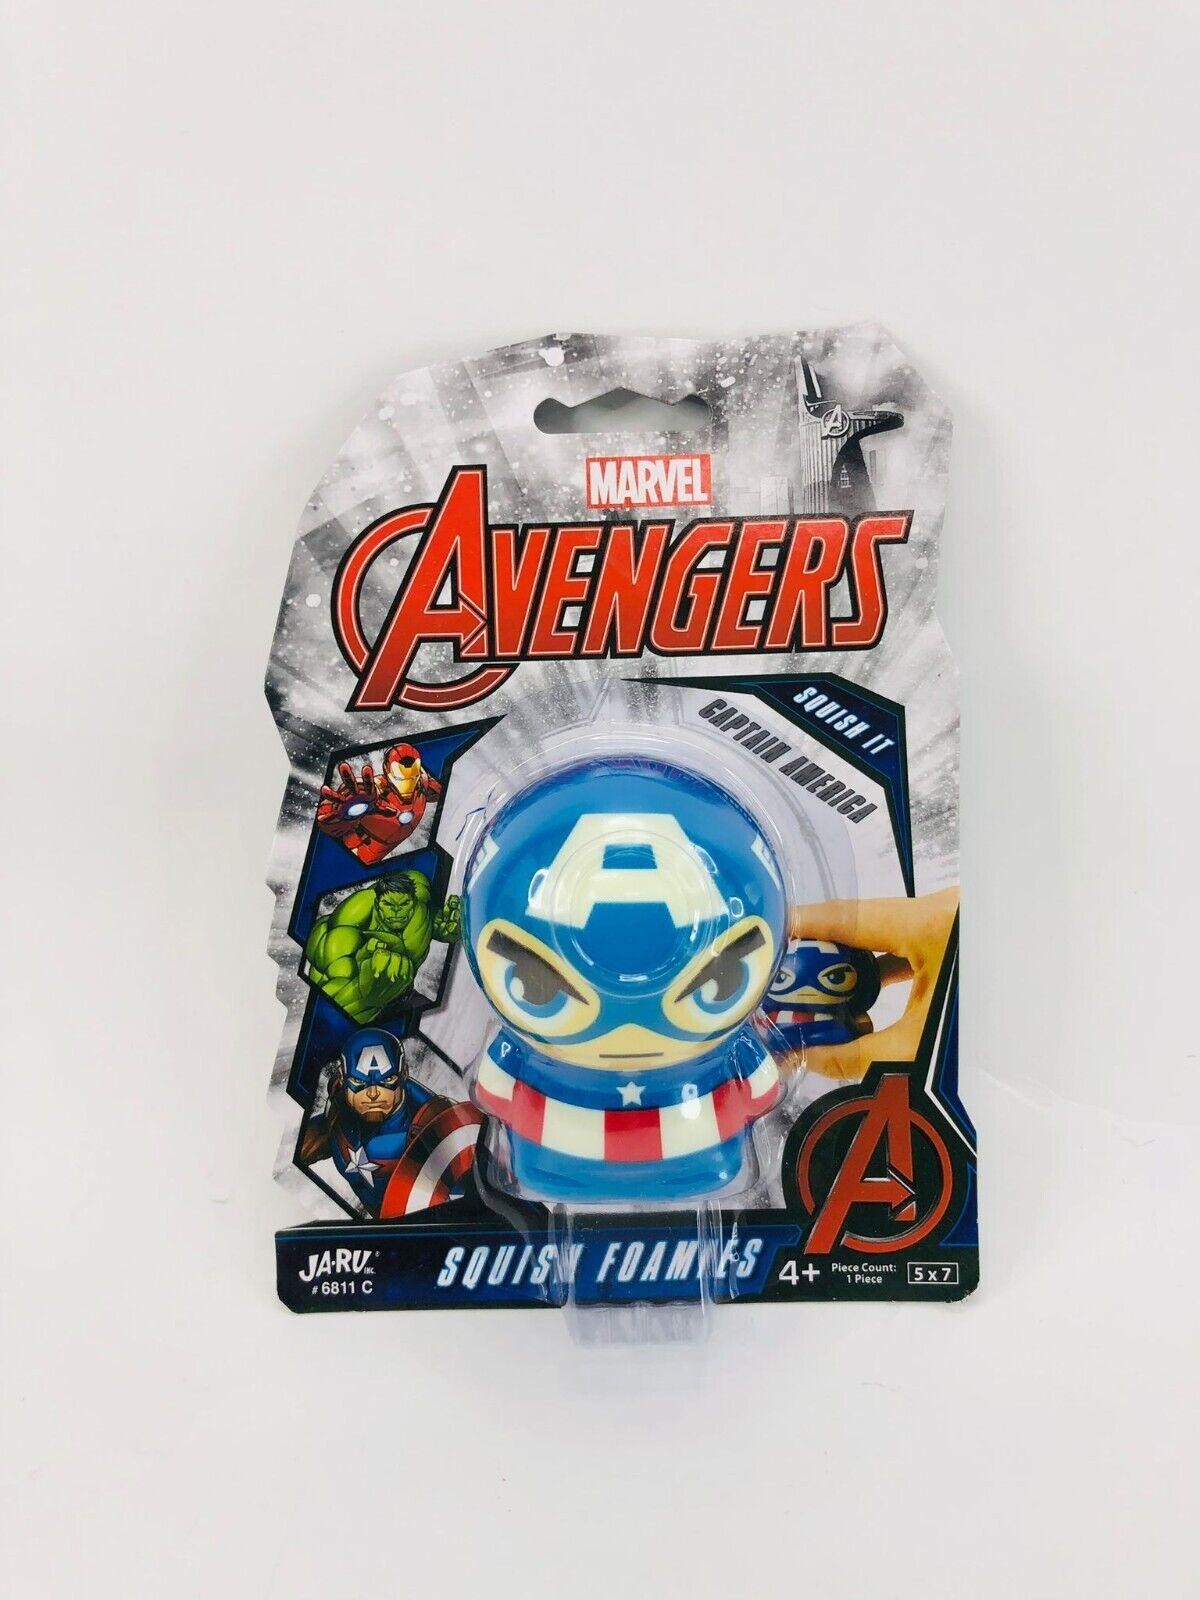 Marvel's Captain America Squish Foamies Action Figure Avengers Brand New Toys